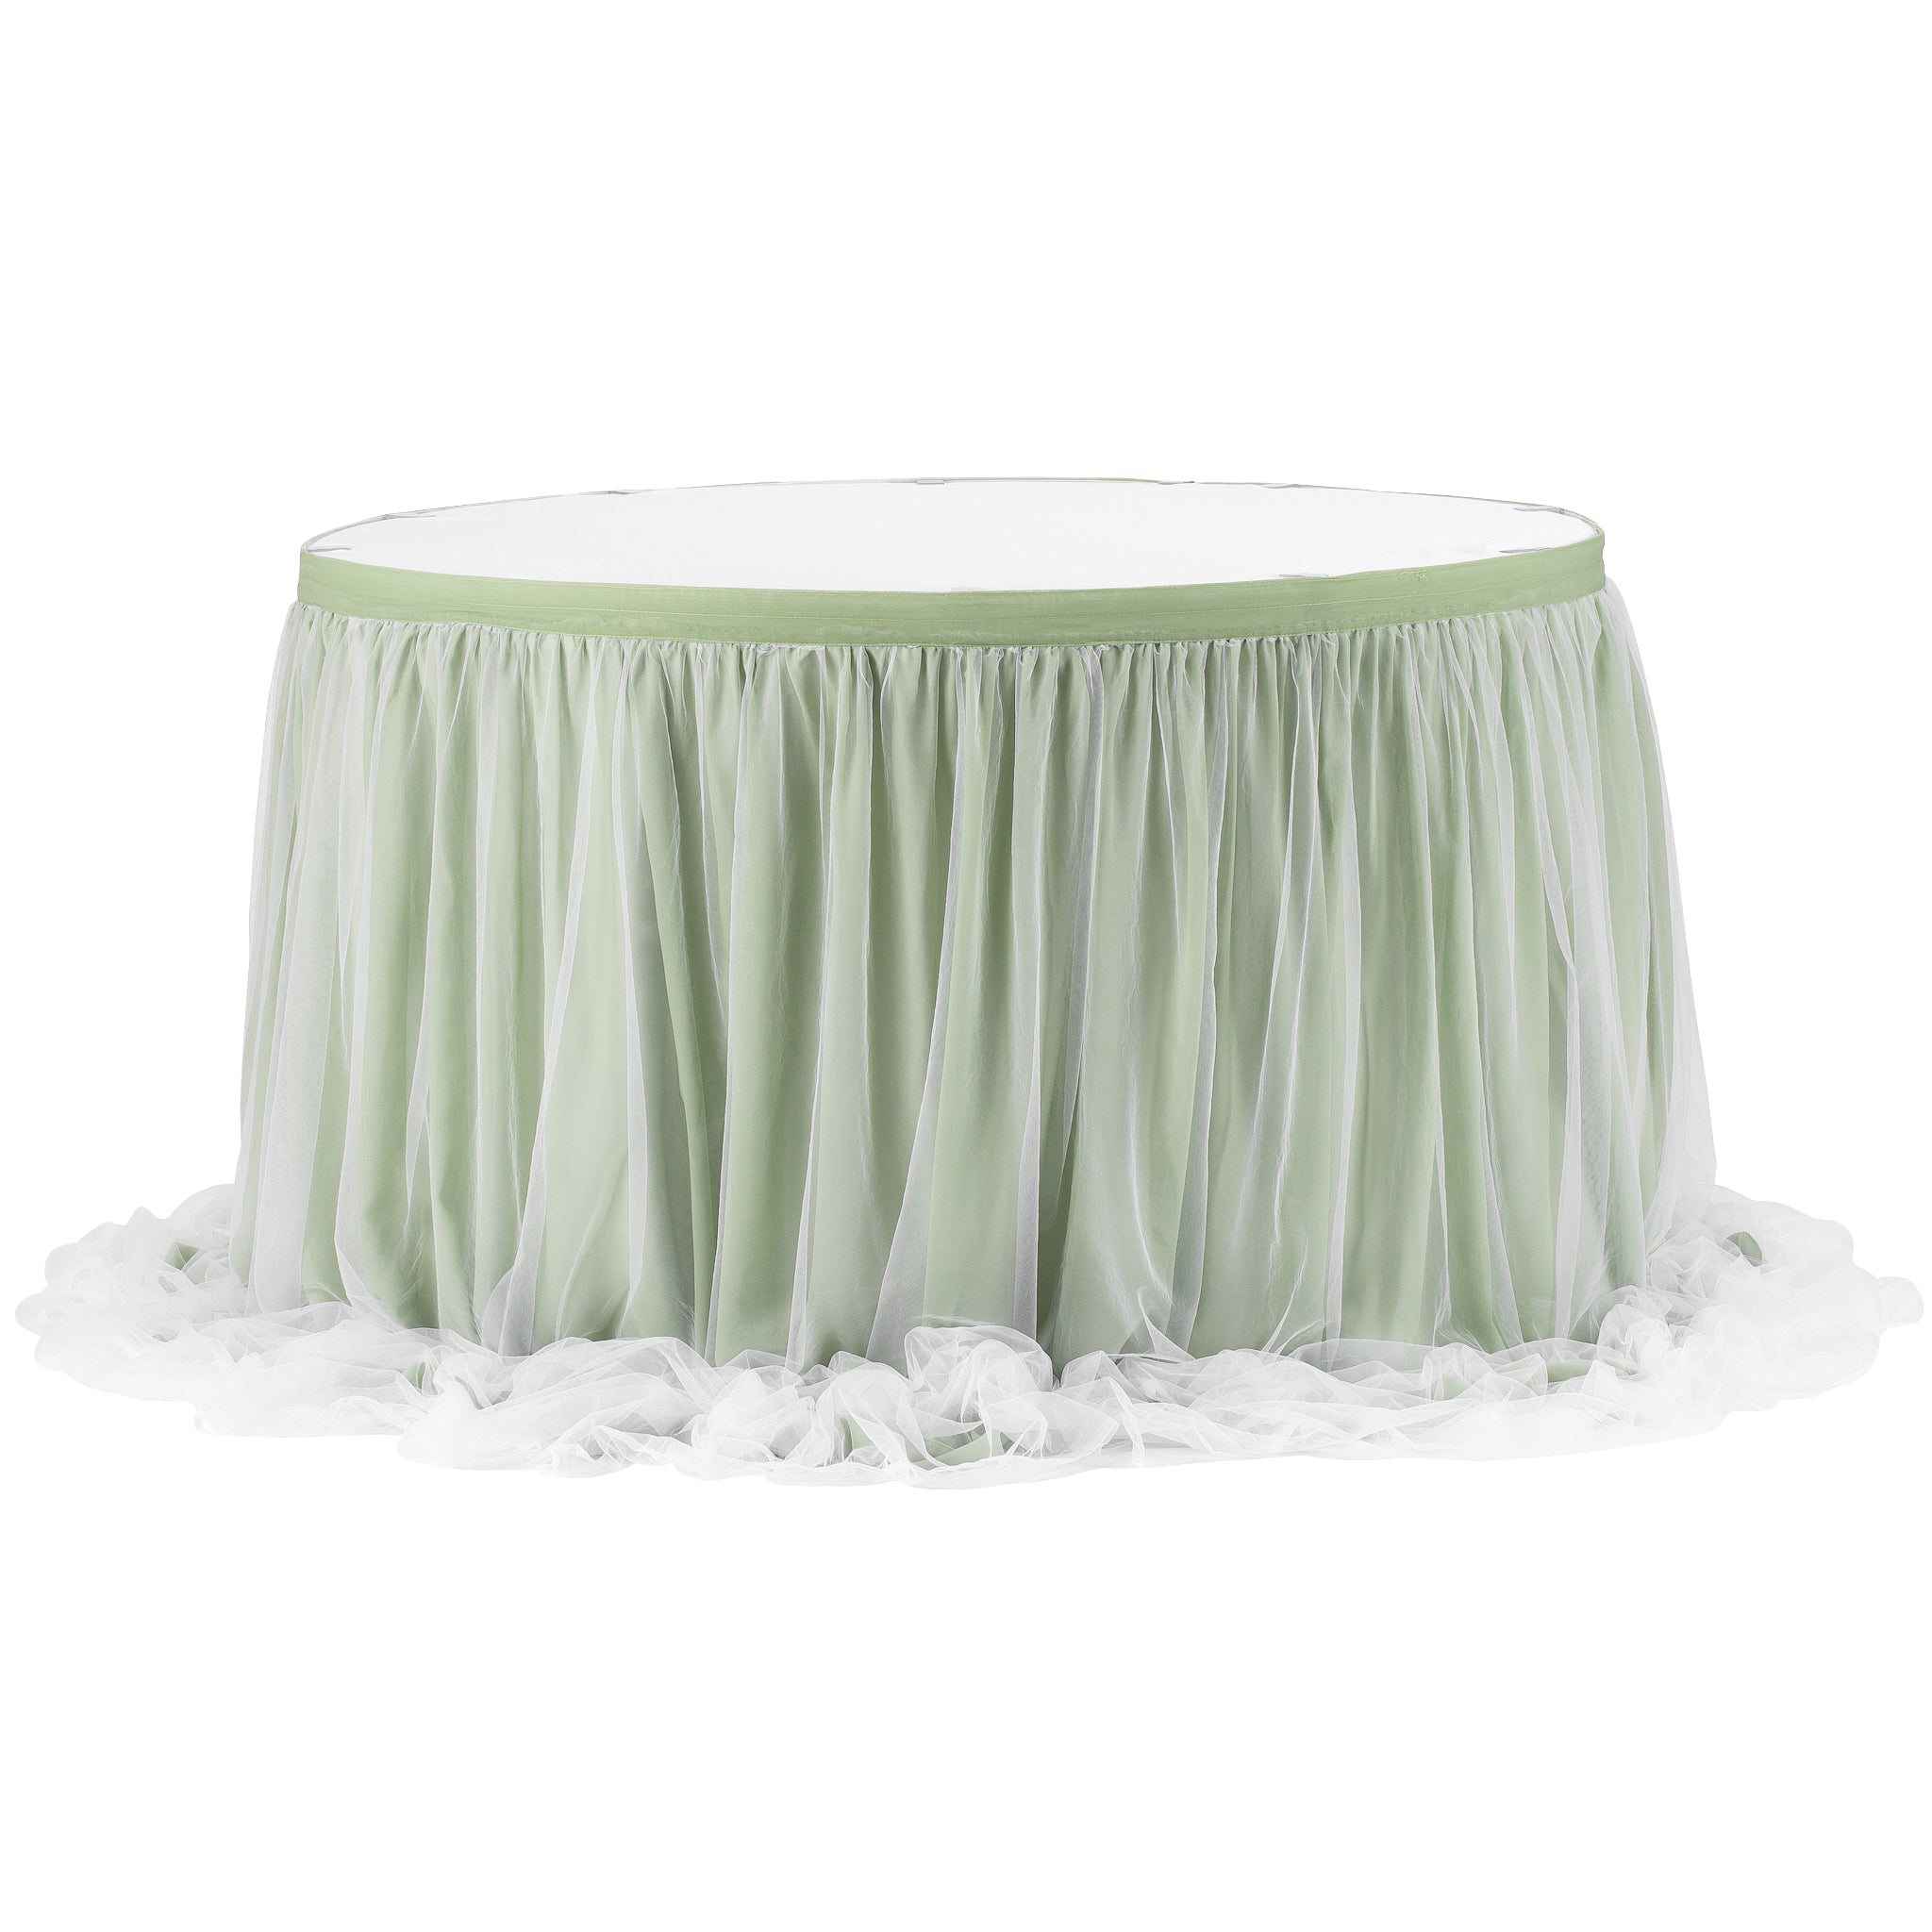 Chiffon Tulle Table Skirt Extra Long 17ft Sage Green Cv Linens 0404